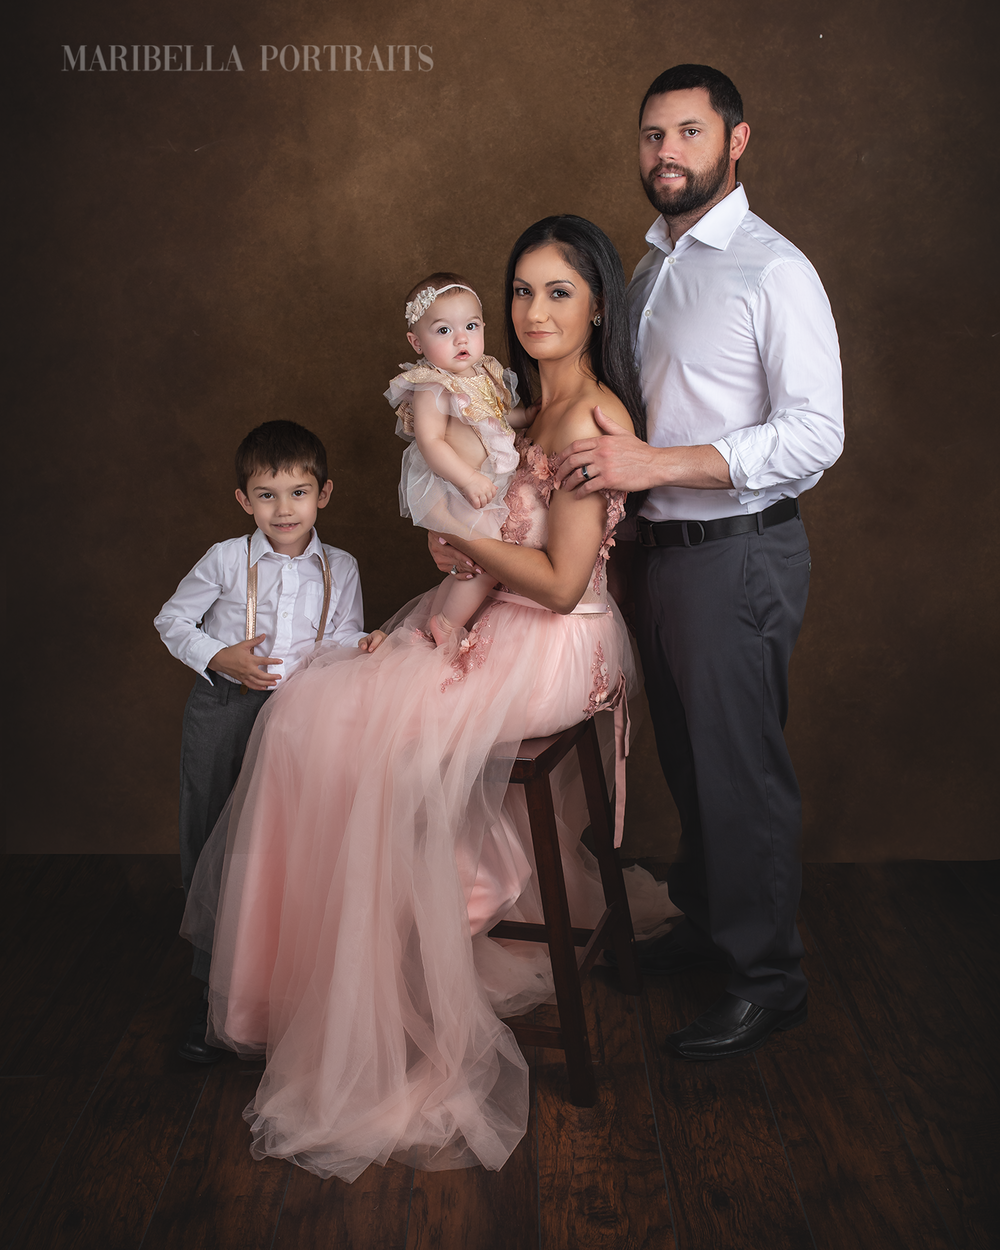 The Edwards Family  A Family Portrait in Houston, Texas